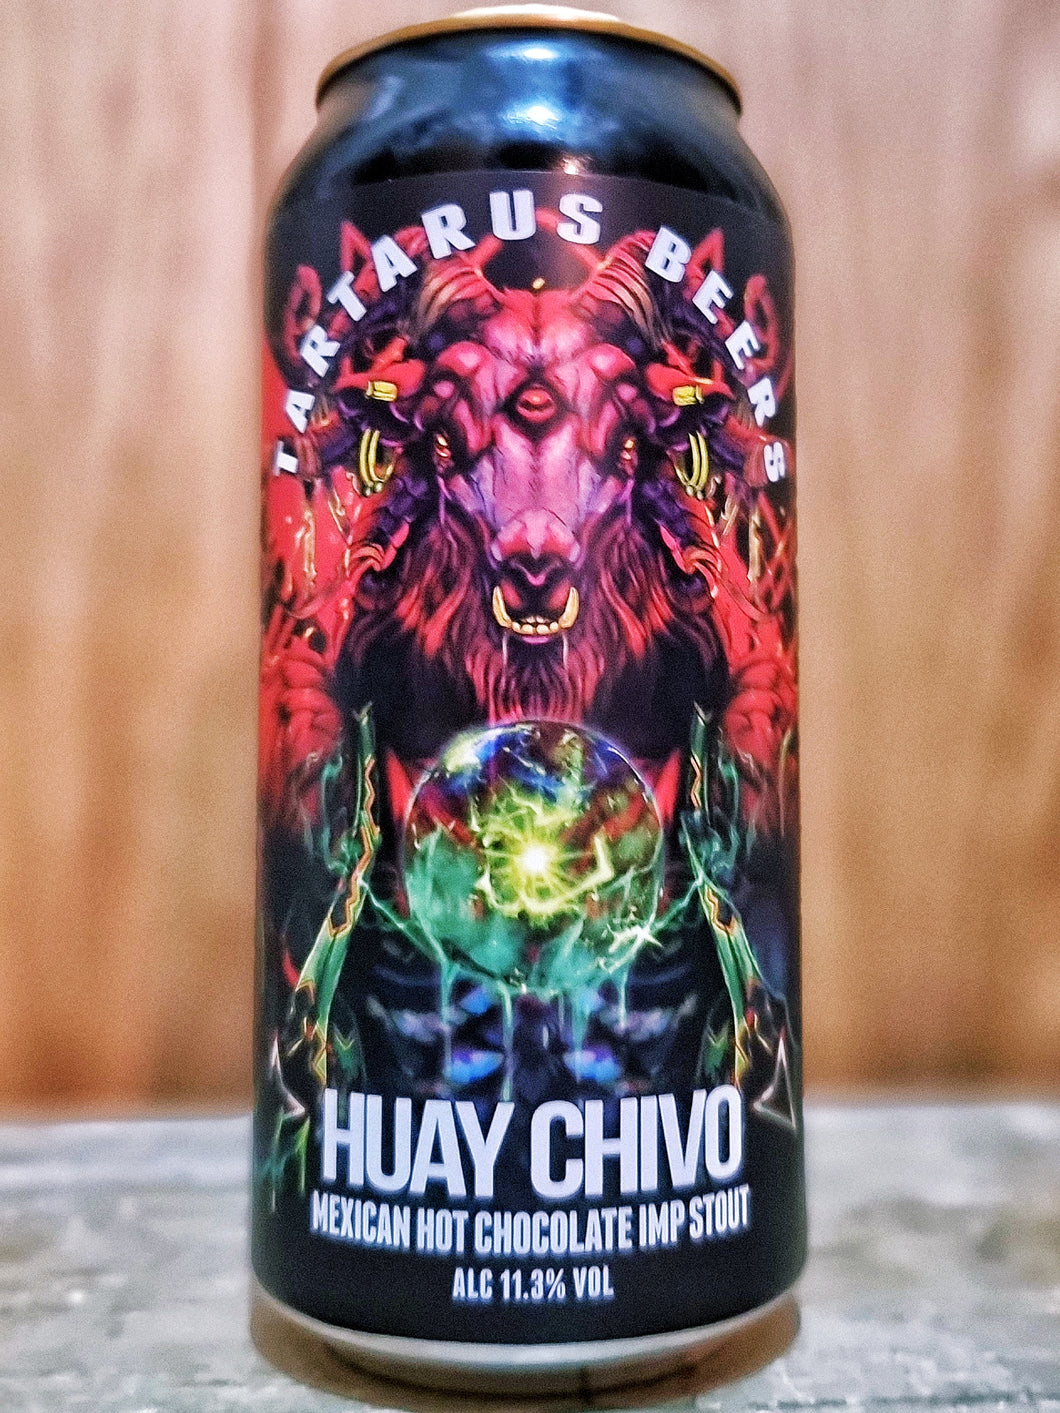 Tartarus Beers - Huay Chivo